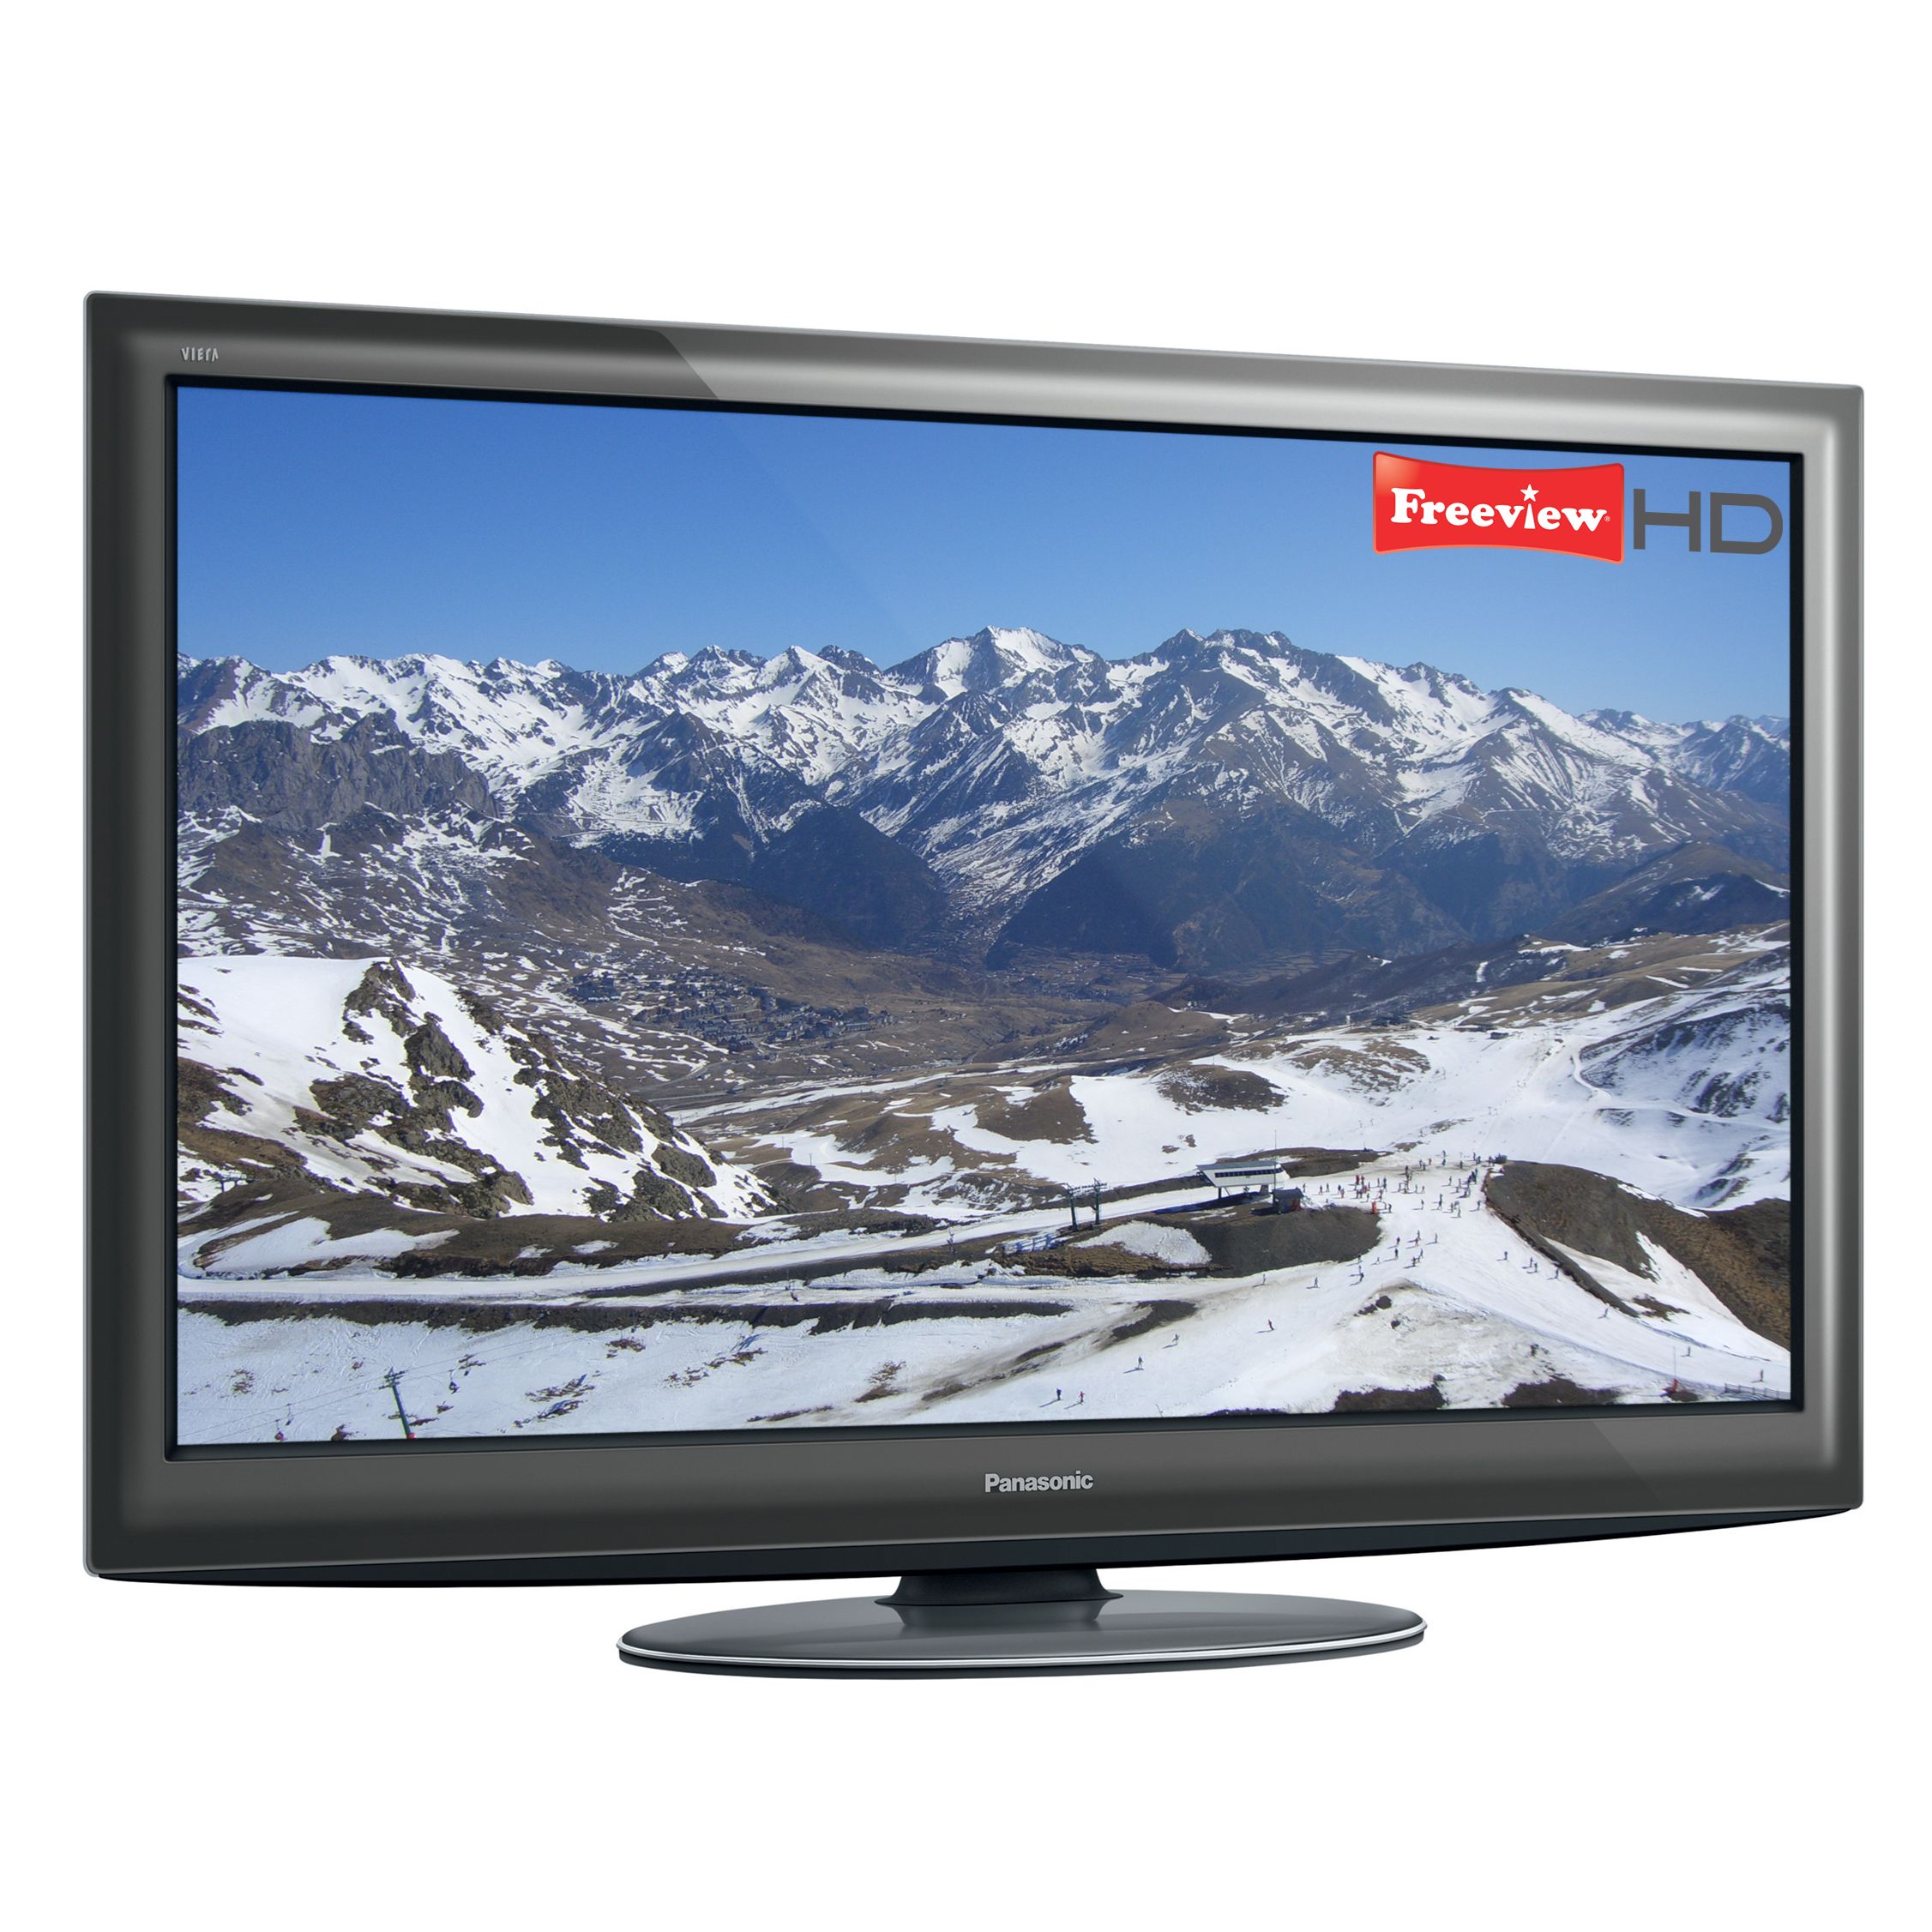 Panasonic Viera TX-L32D25B LCD/LED HD 1080p TV, 32" with Built-in freesat & Freeview HD at John Lewis